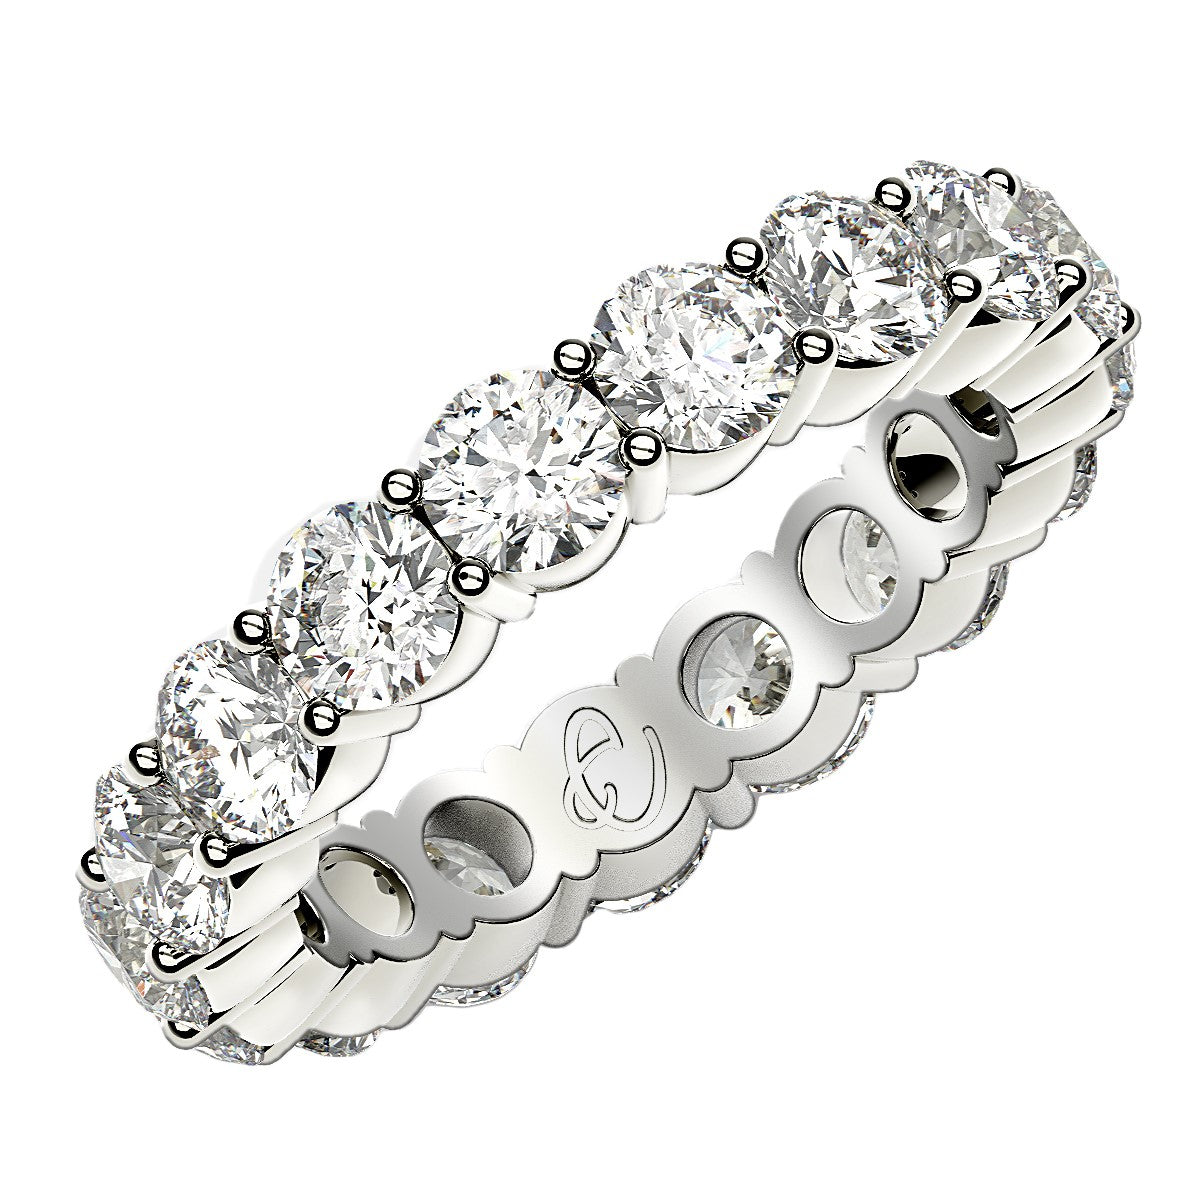 Round Cut Lab Grown Diamond Eternity Ring In 14K White Gold 3 Cttw Fg Vs2 72995-1